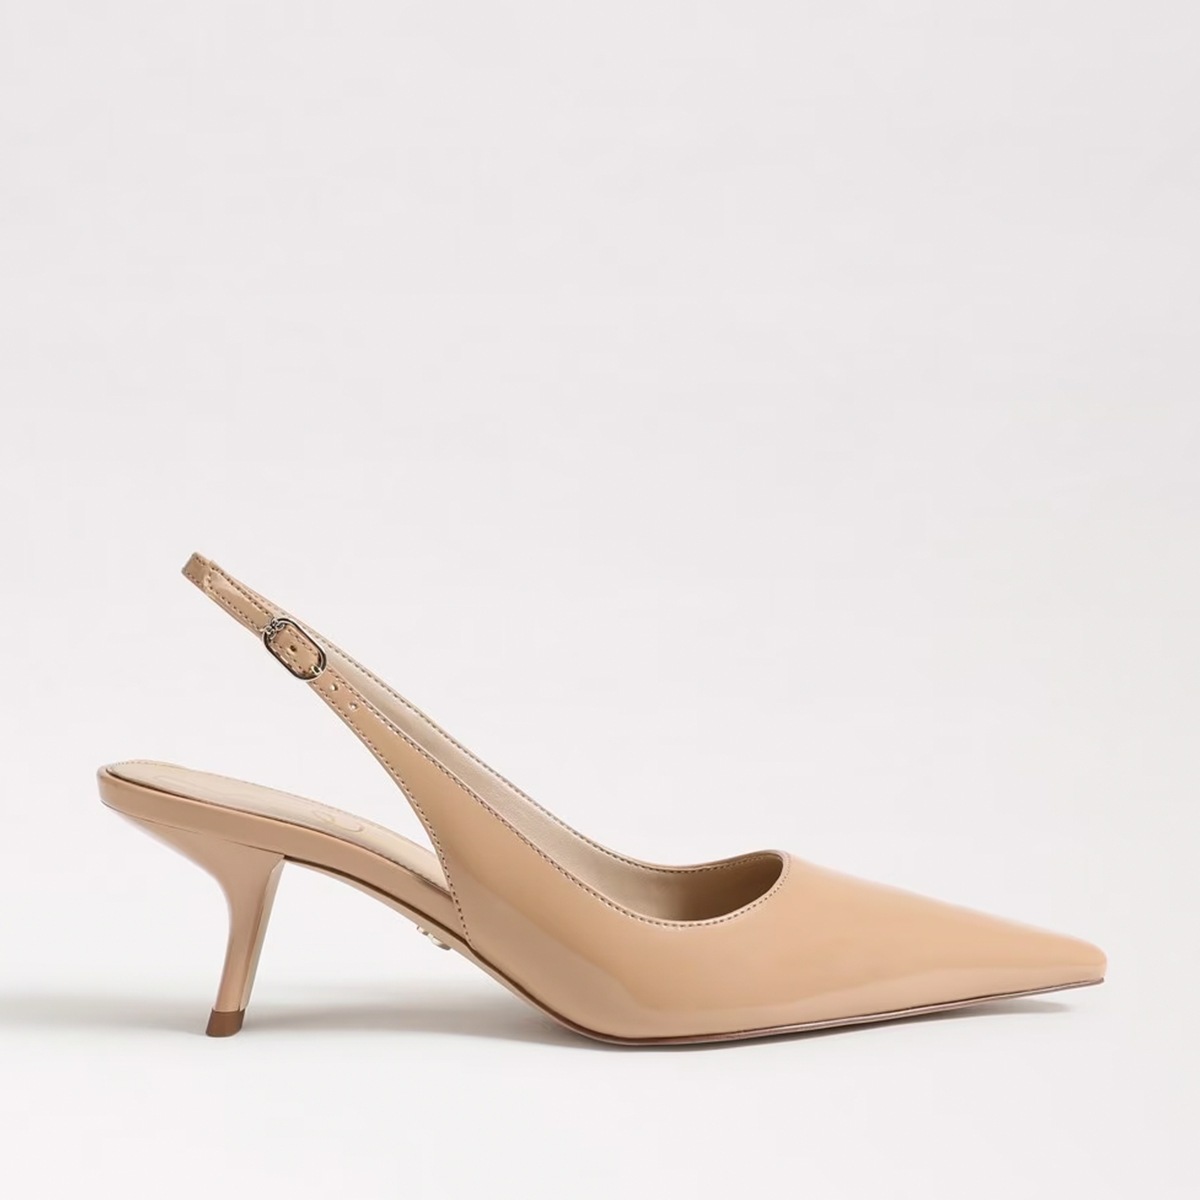 Shop heels from Sam Edelman